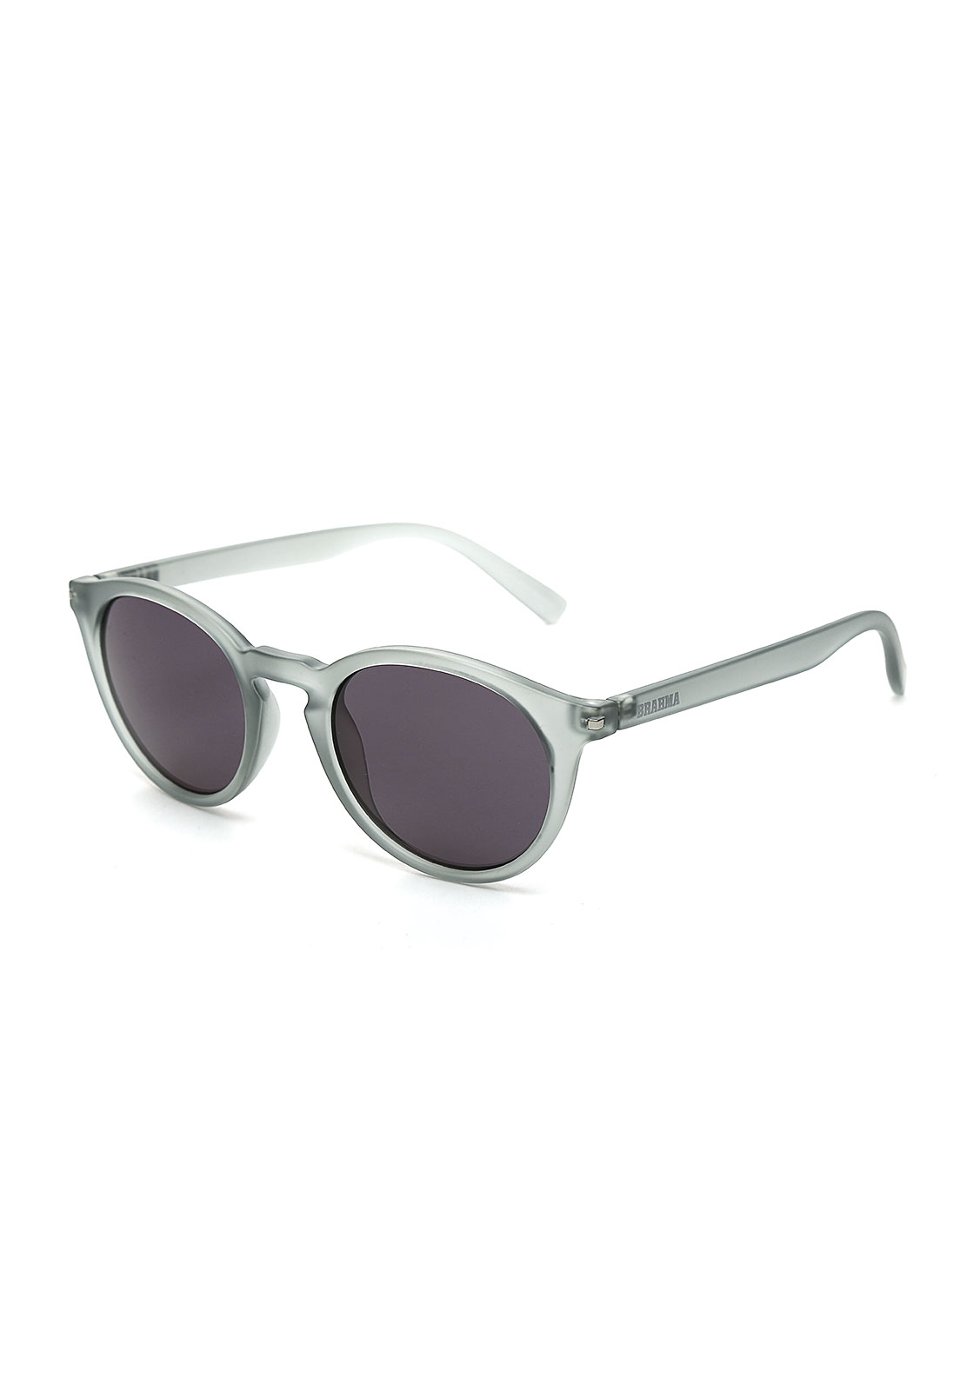 GAF0001-Gris/Mate - Sunglasses